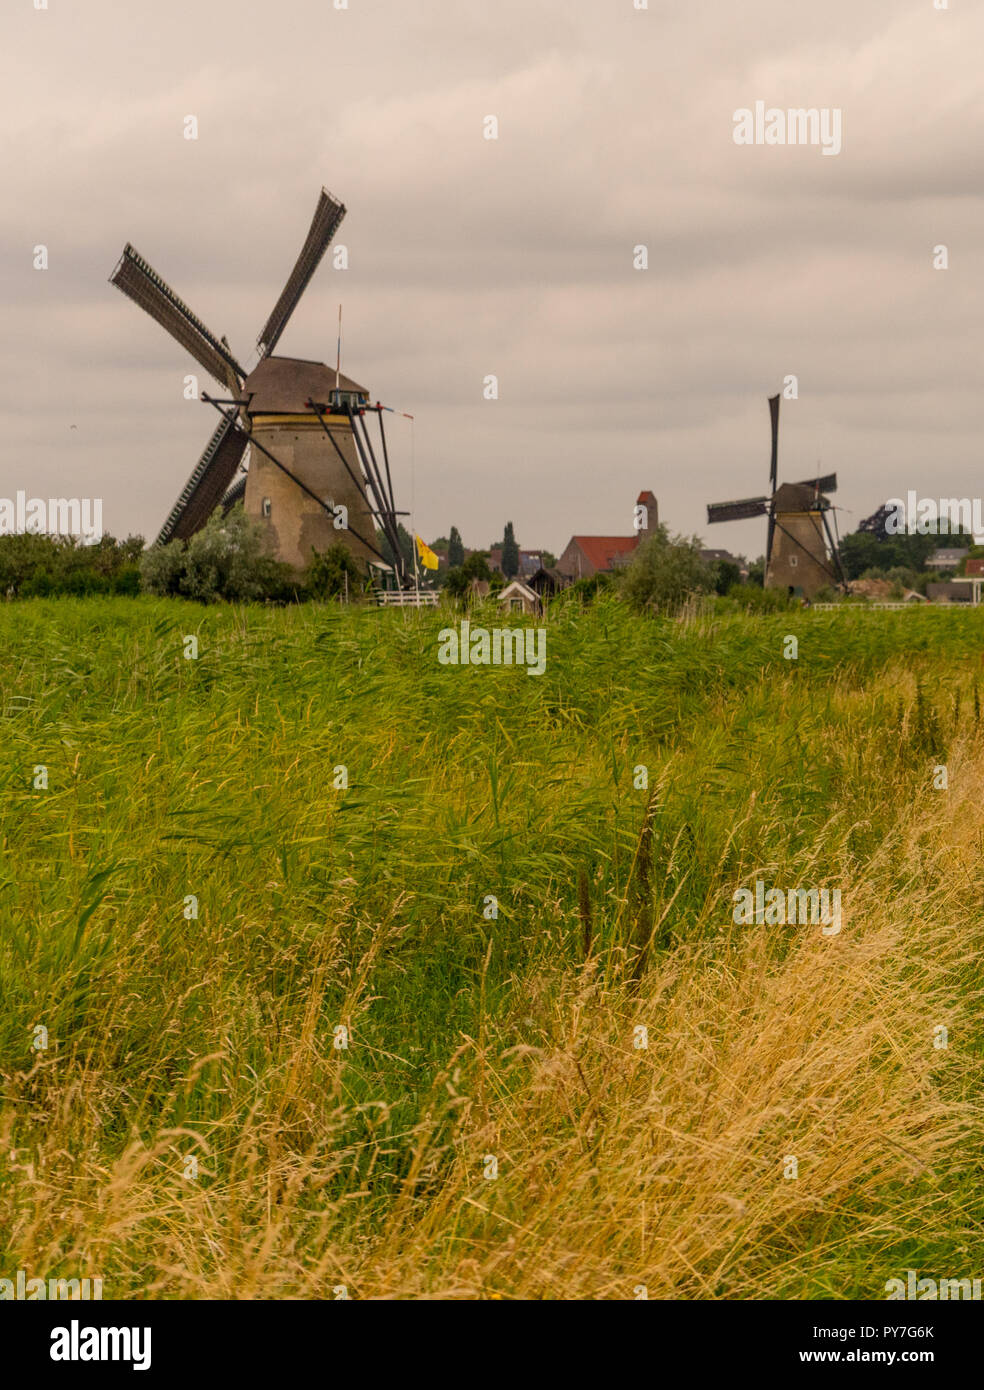 Netherlands, Rotterdam, Kinderdijk, heritage windmill above lush green grass along a canal Stock Photo